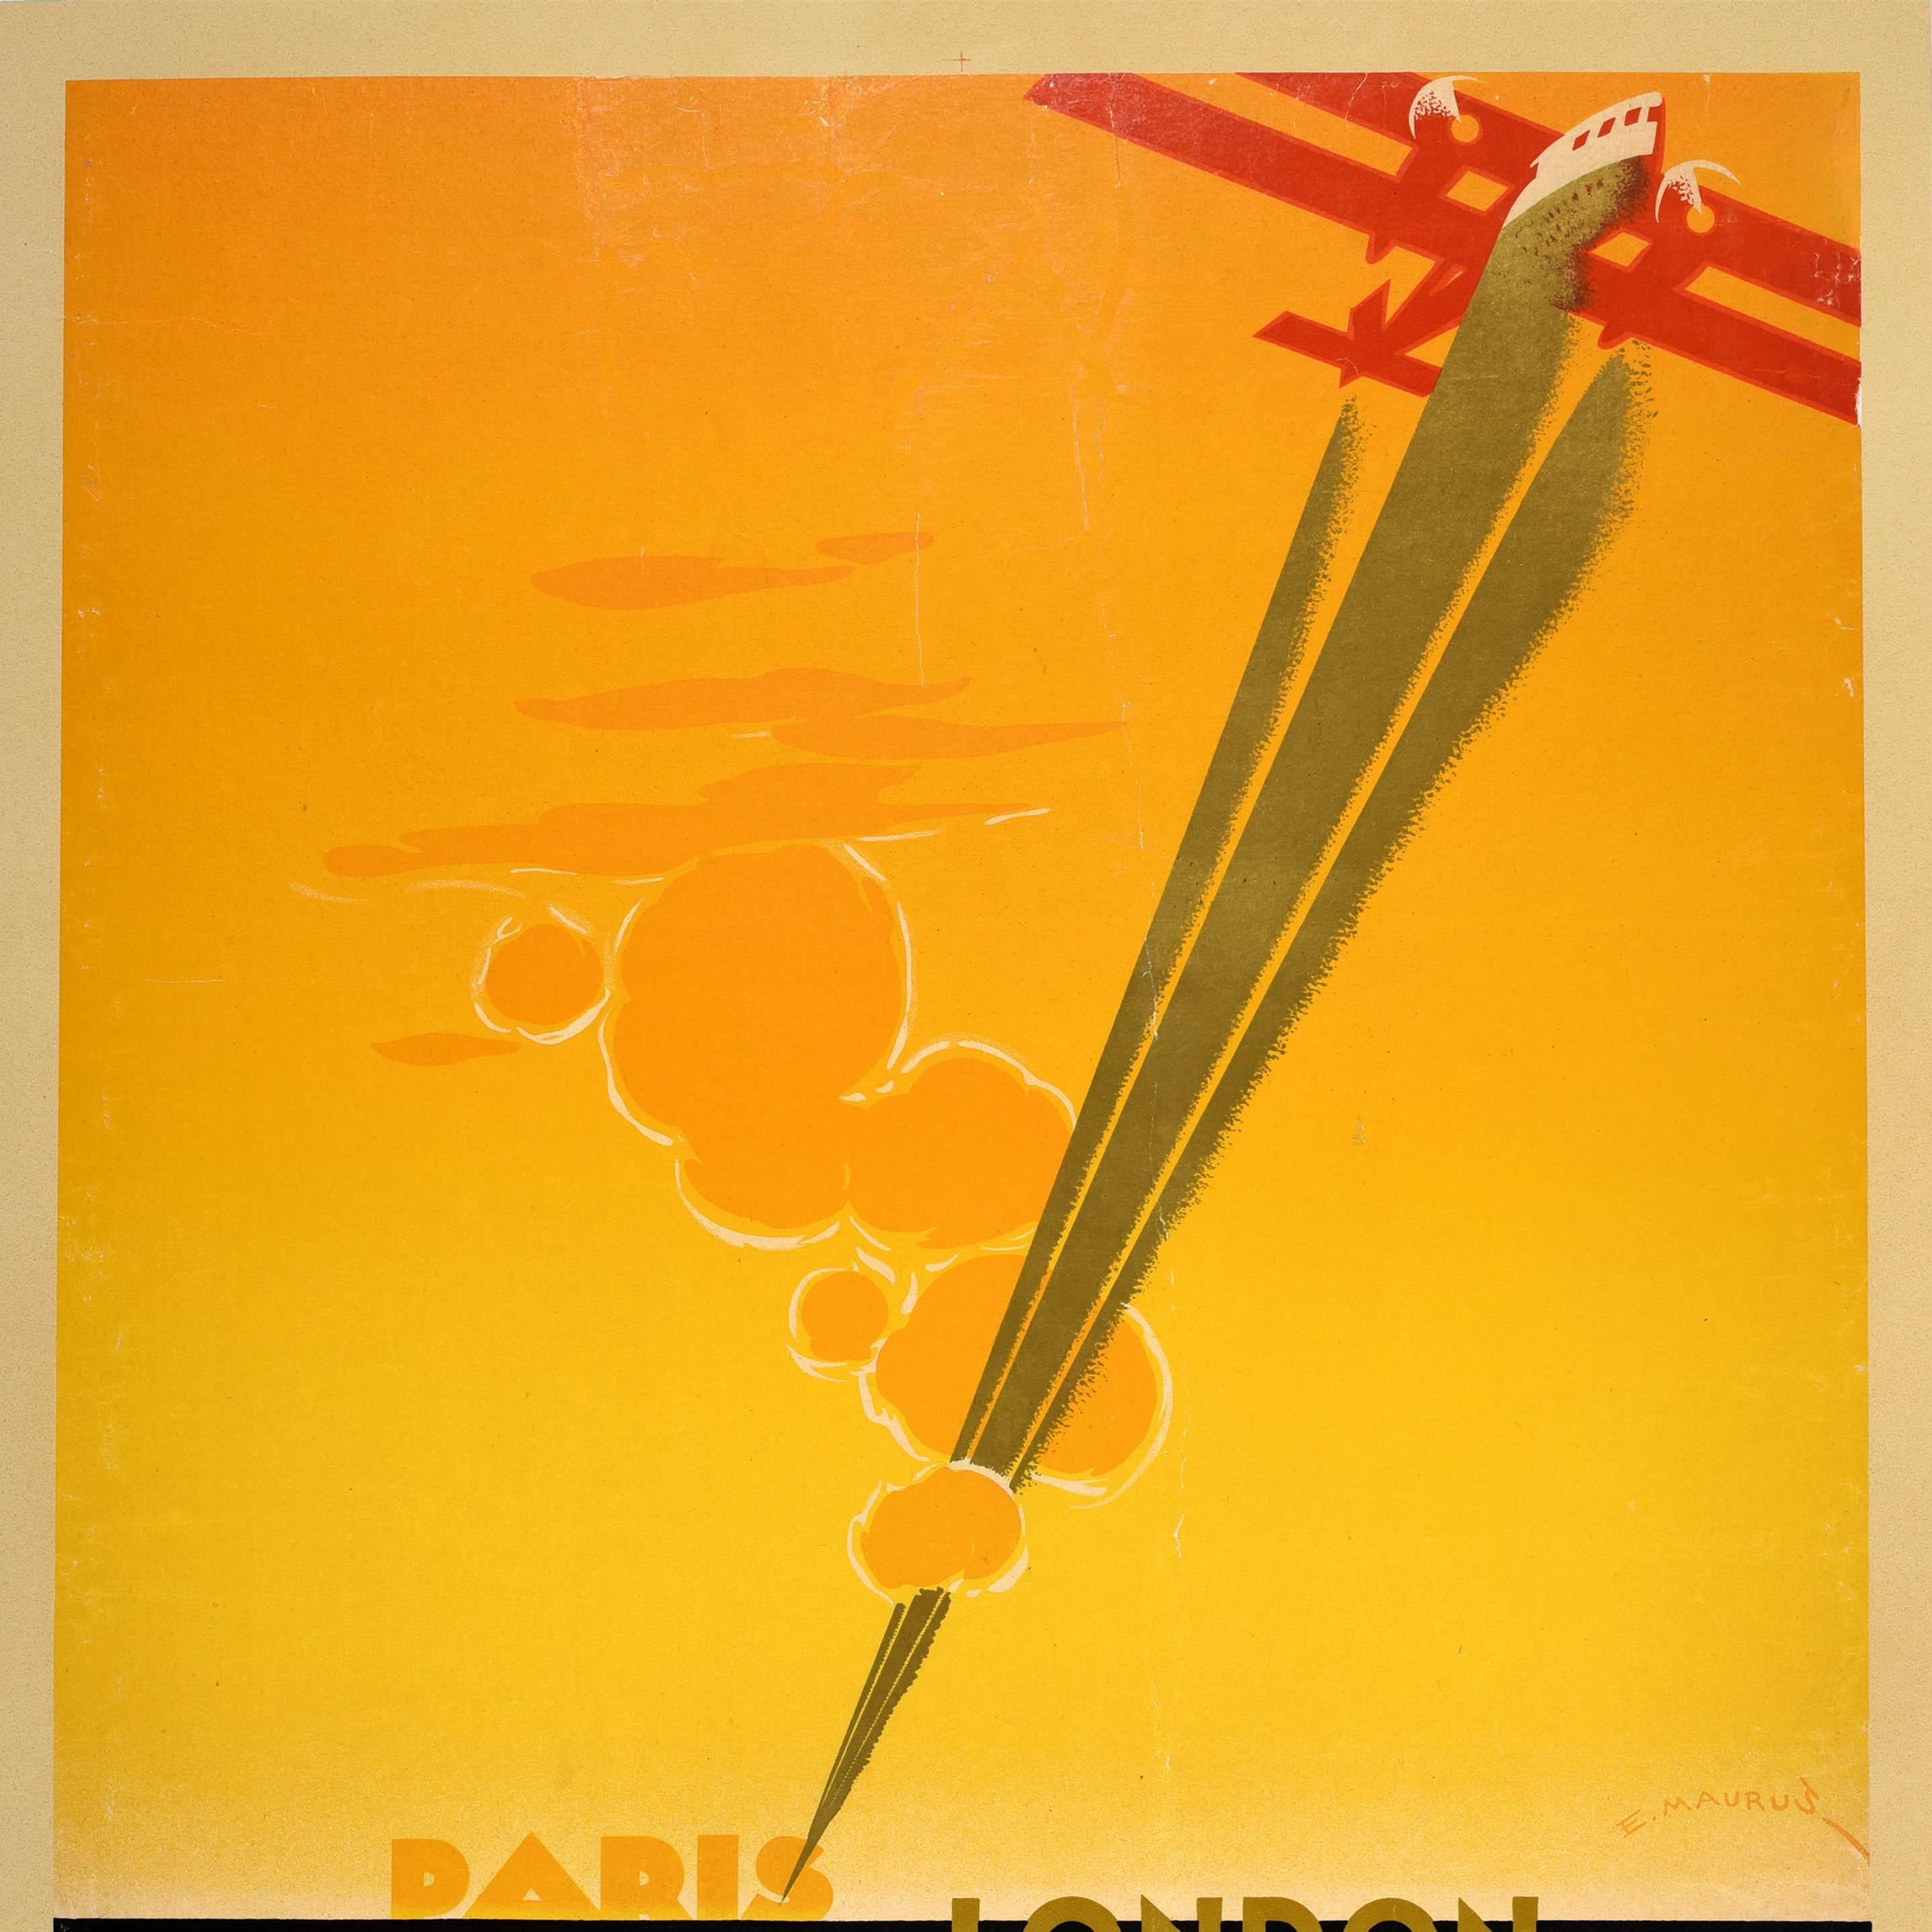 French Original Vintage Travel Poster Golden Ray Air Union Paris London Art Deco Design